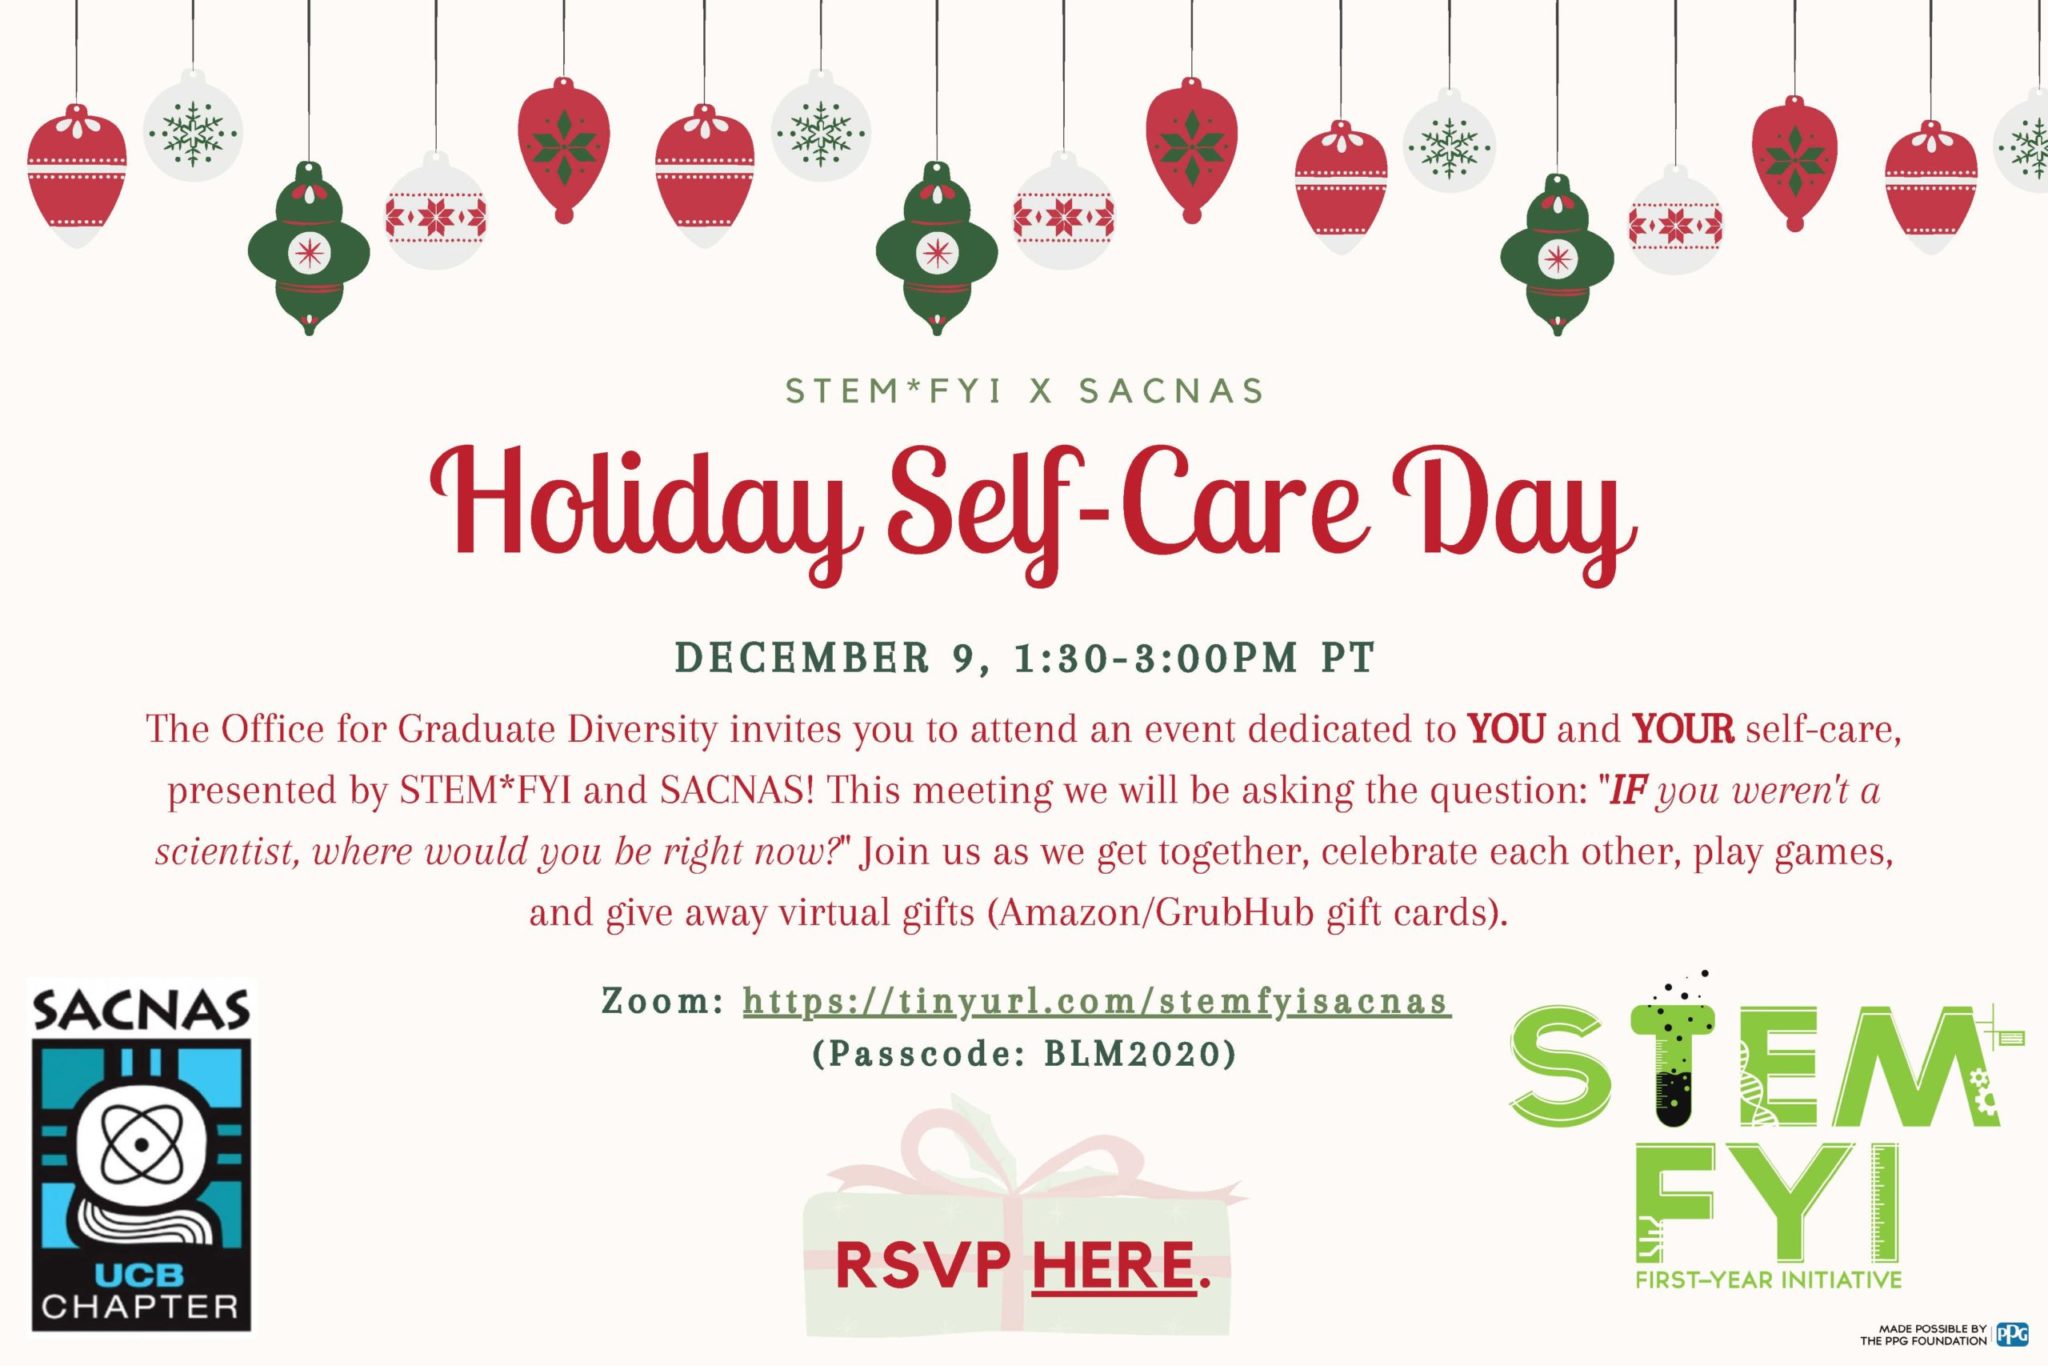 STEM_FYI x SACNAS Holiday Self-Care Day